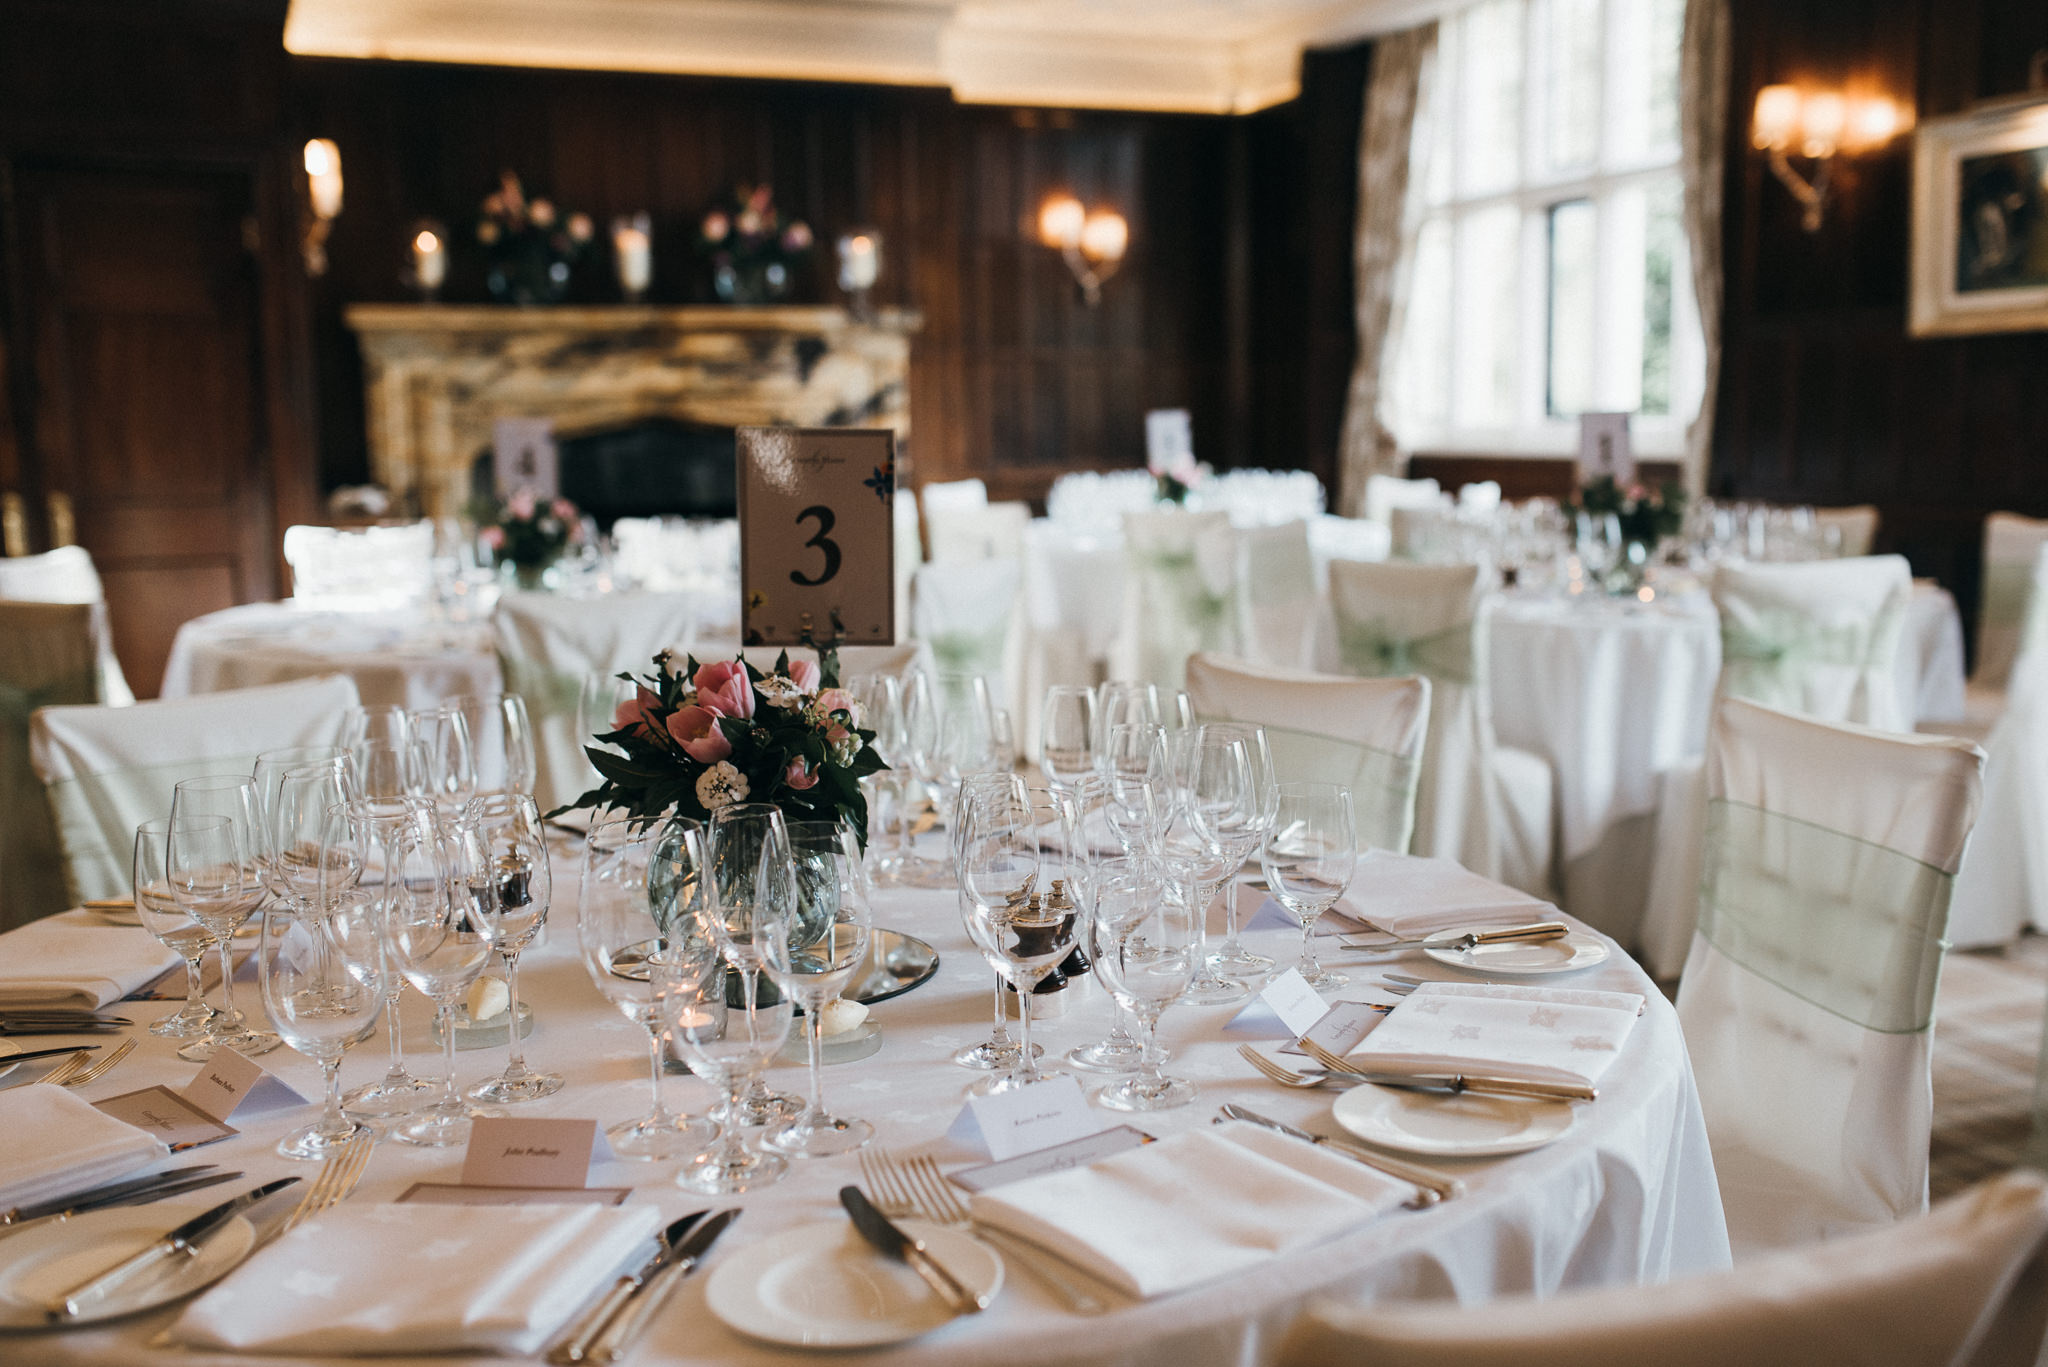 Gravetye Manor wedding table arrangements 